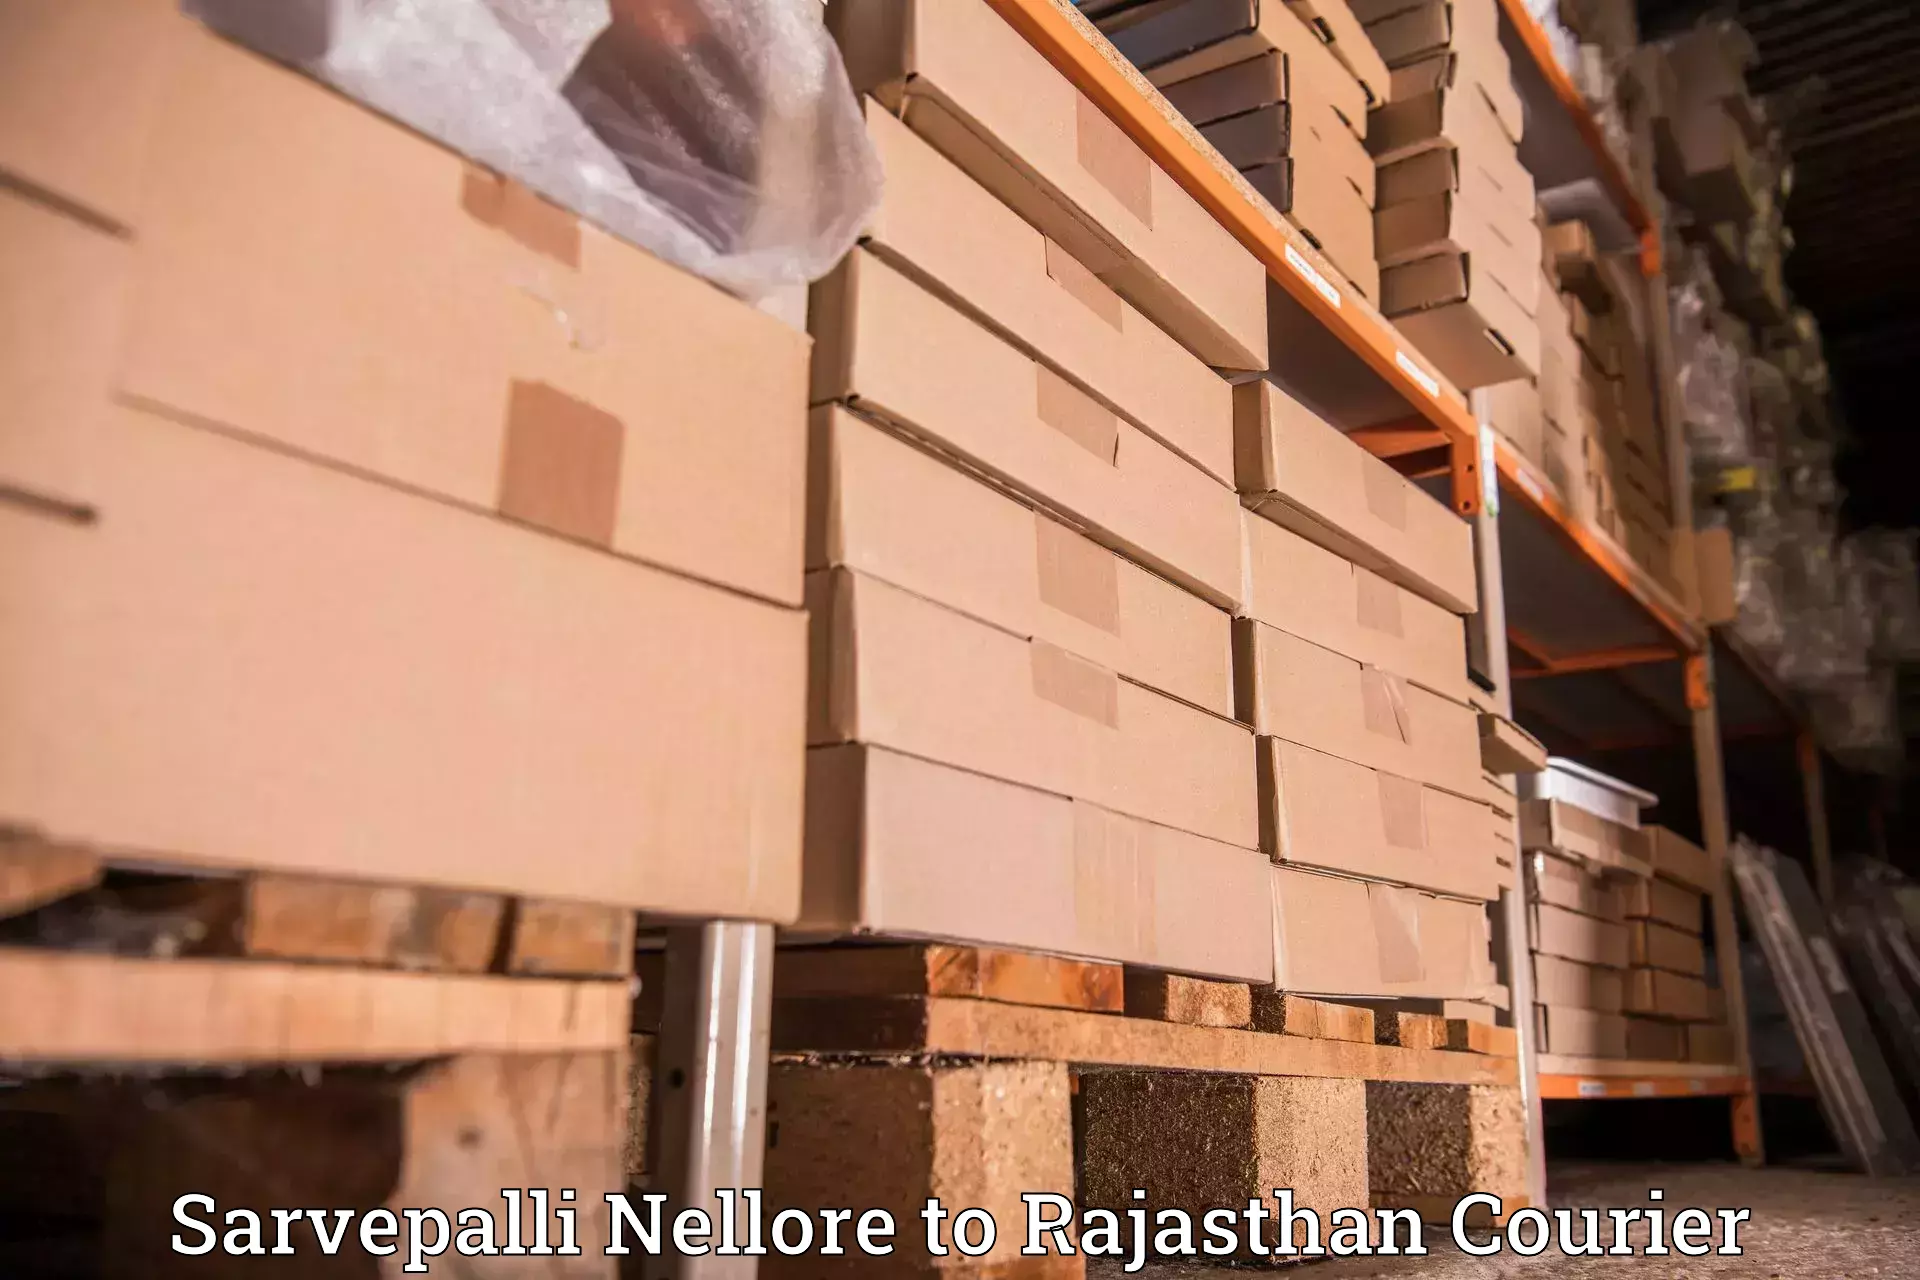 Reliable logistics providers Sarvepalli Nellore to Rajasthan